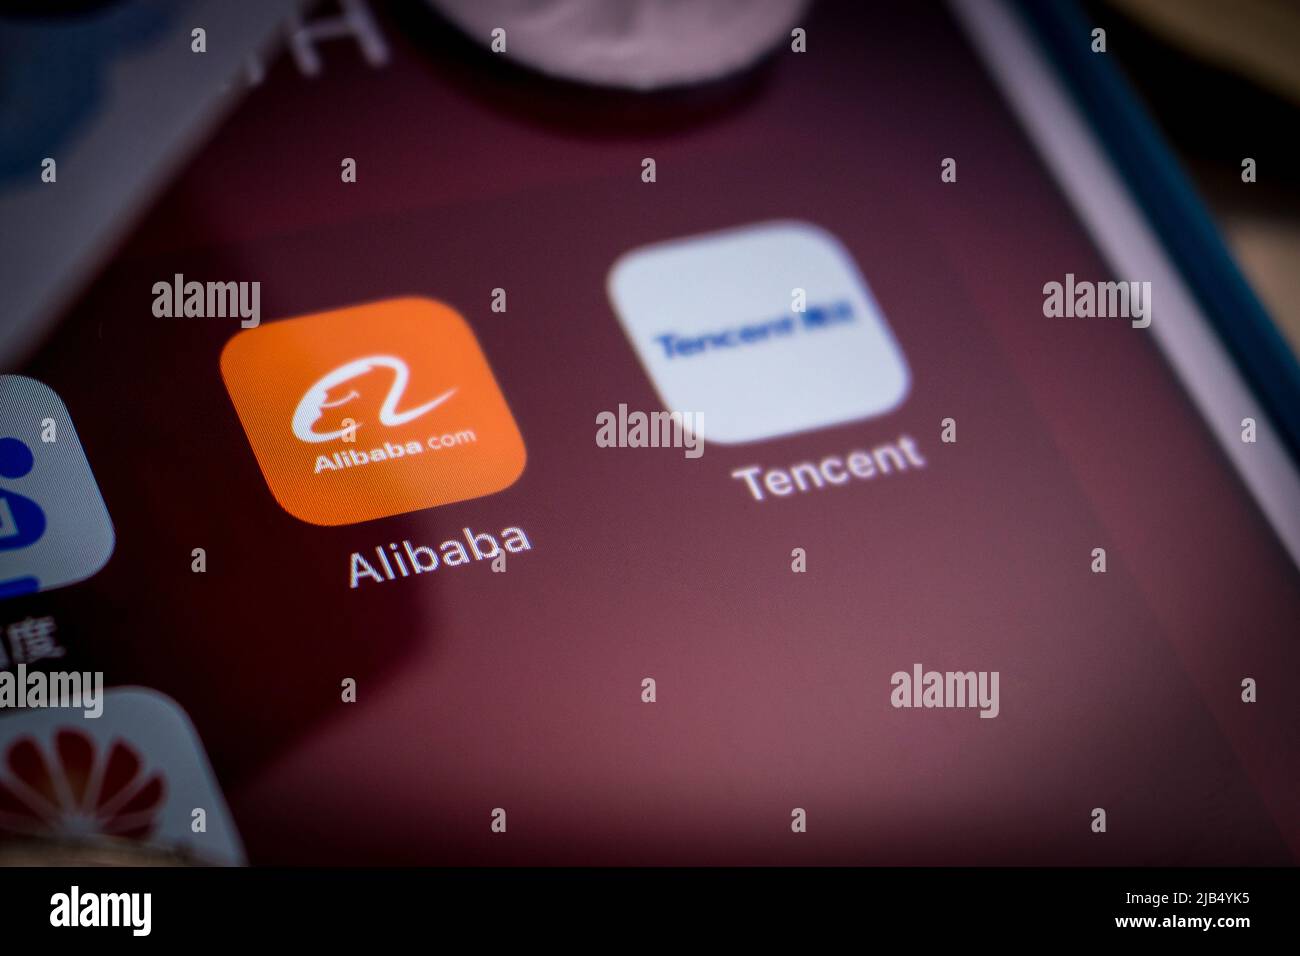 Alibaba logo, founded on 4 April 1999 in Hangzhou, Zhejiang, with Chinese big tech company logos (Baidu, Tencent and Huawei) & money on an iPhone Stock Photo